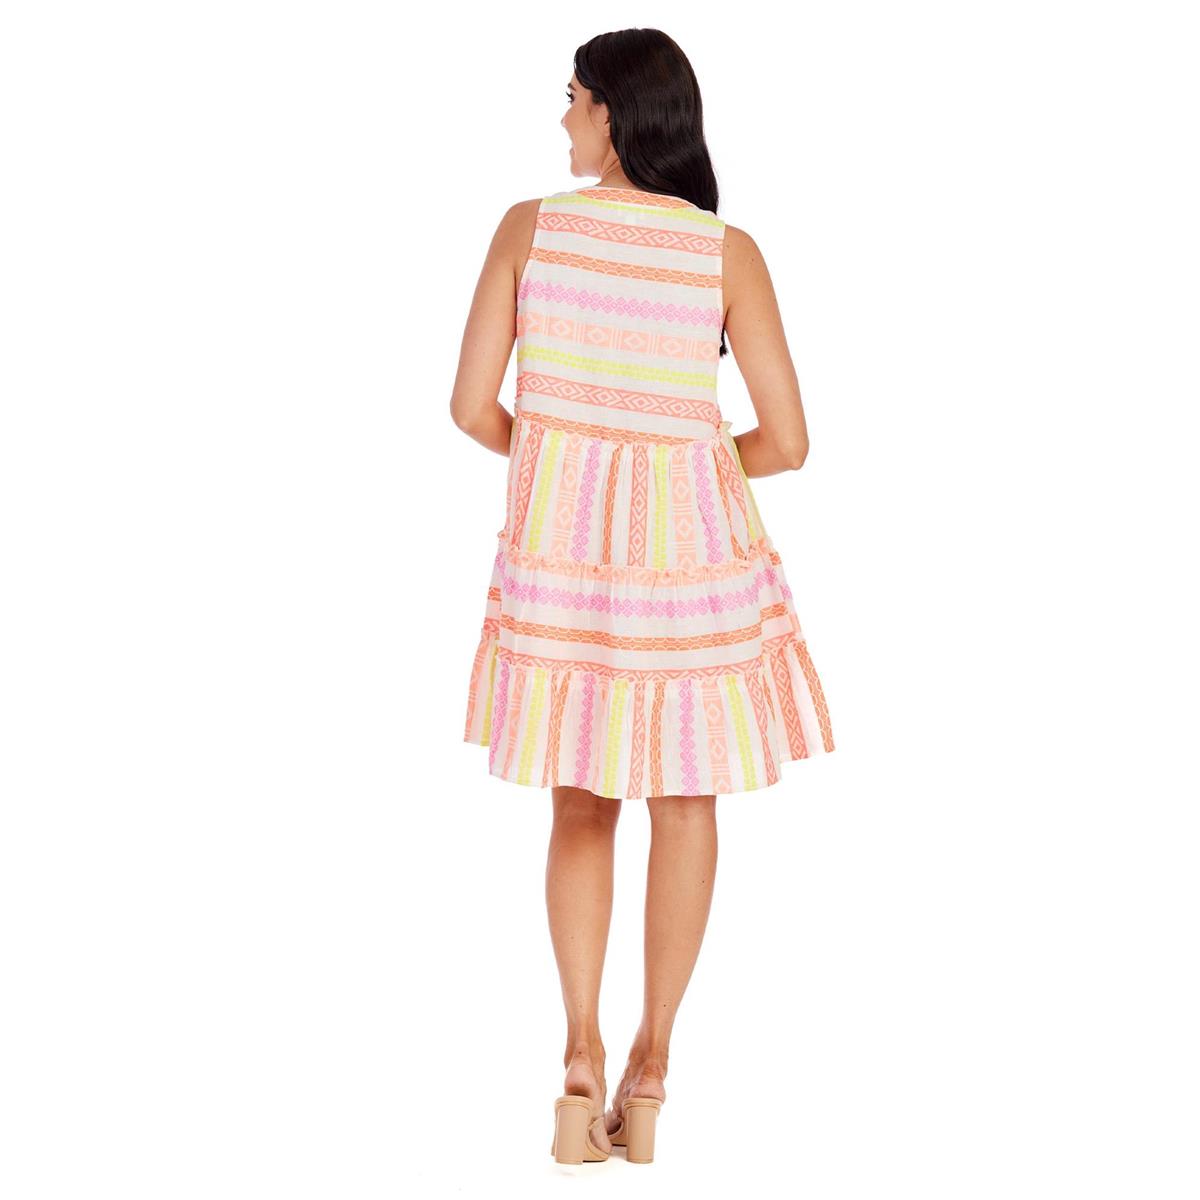 Angelica Yarn-Dye Dress by Mud Pie - Pink